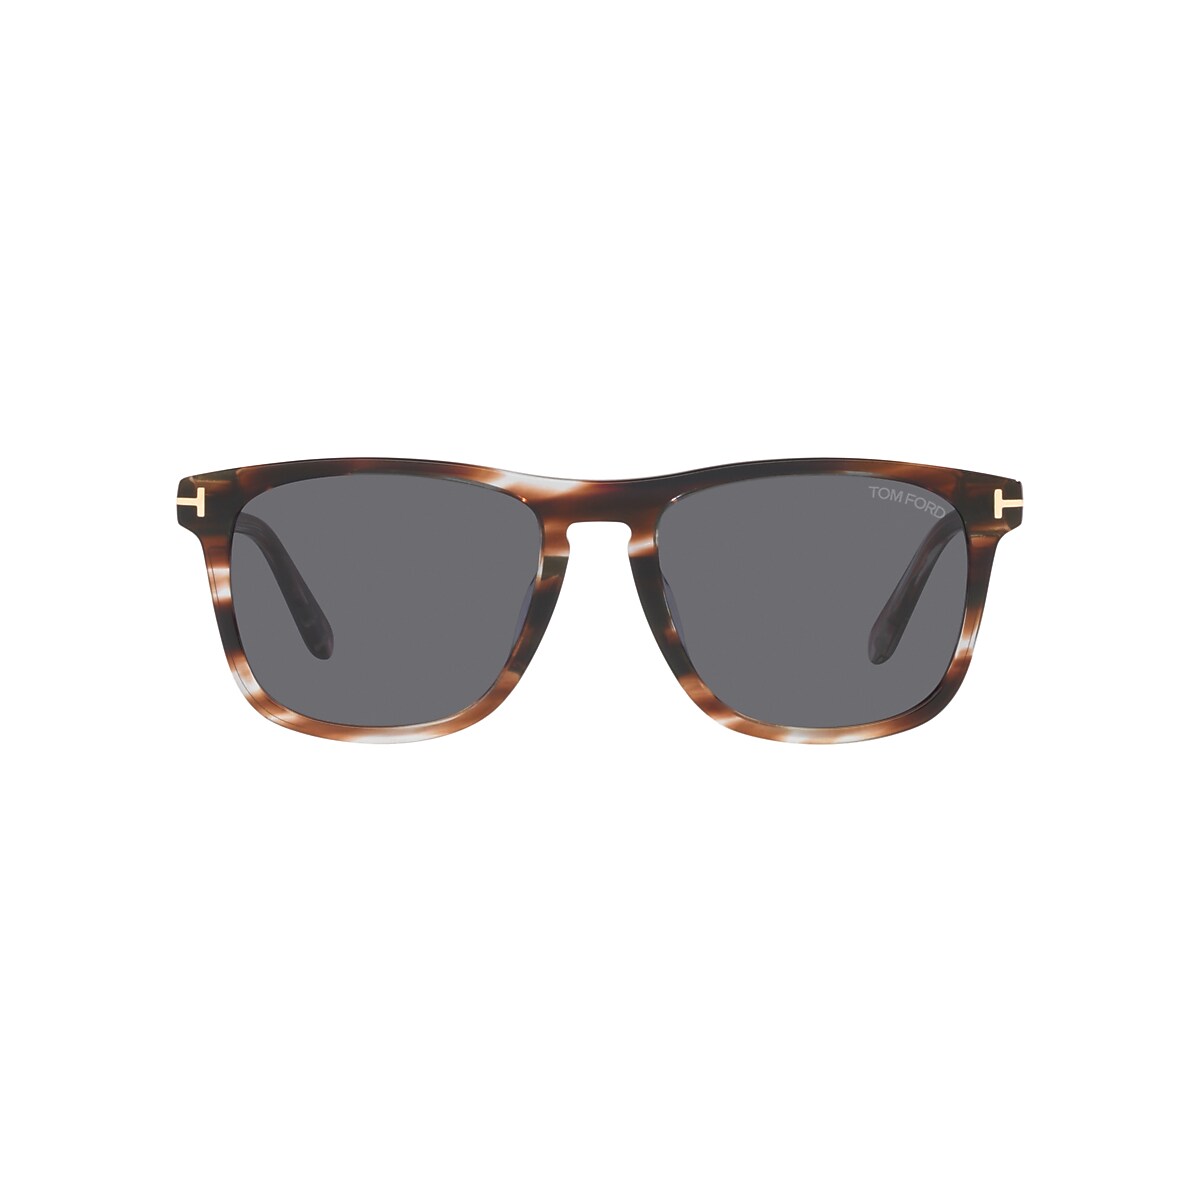 Tom Ford FT0930-F 56 Grey & Tortoise Sunglasses | Sunglass Hut USA